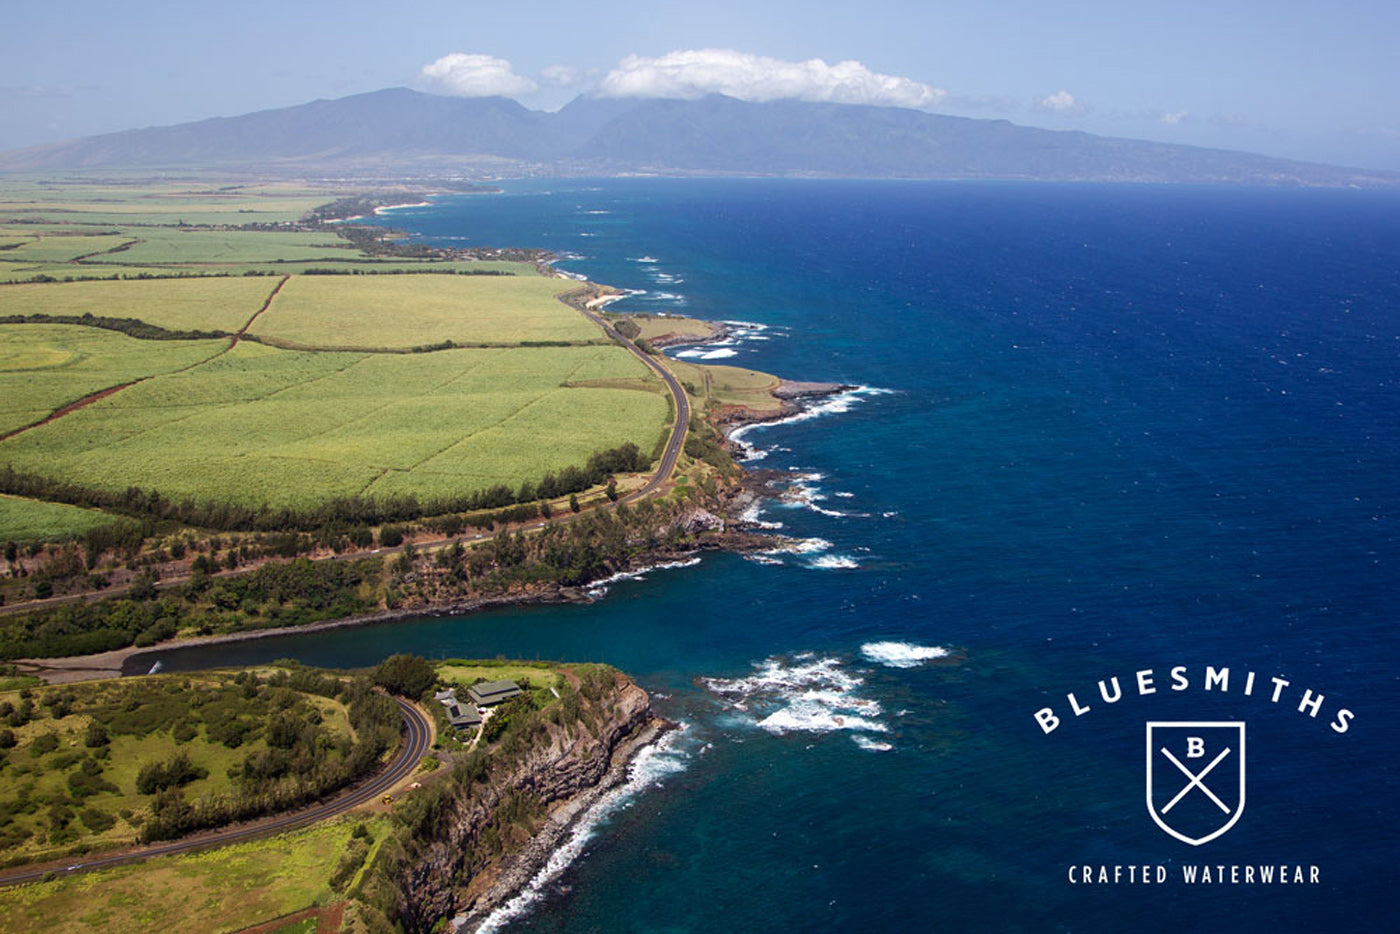 The Maliko Run, Maui Hawaii (Bluesmiths)